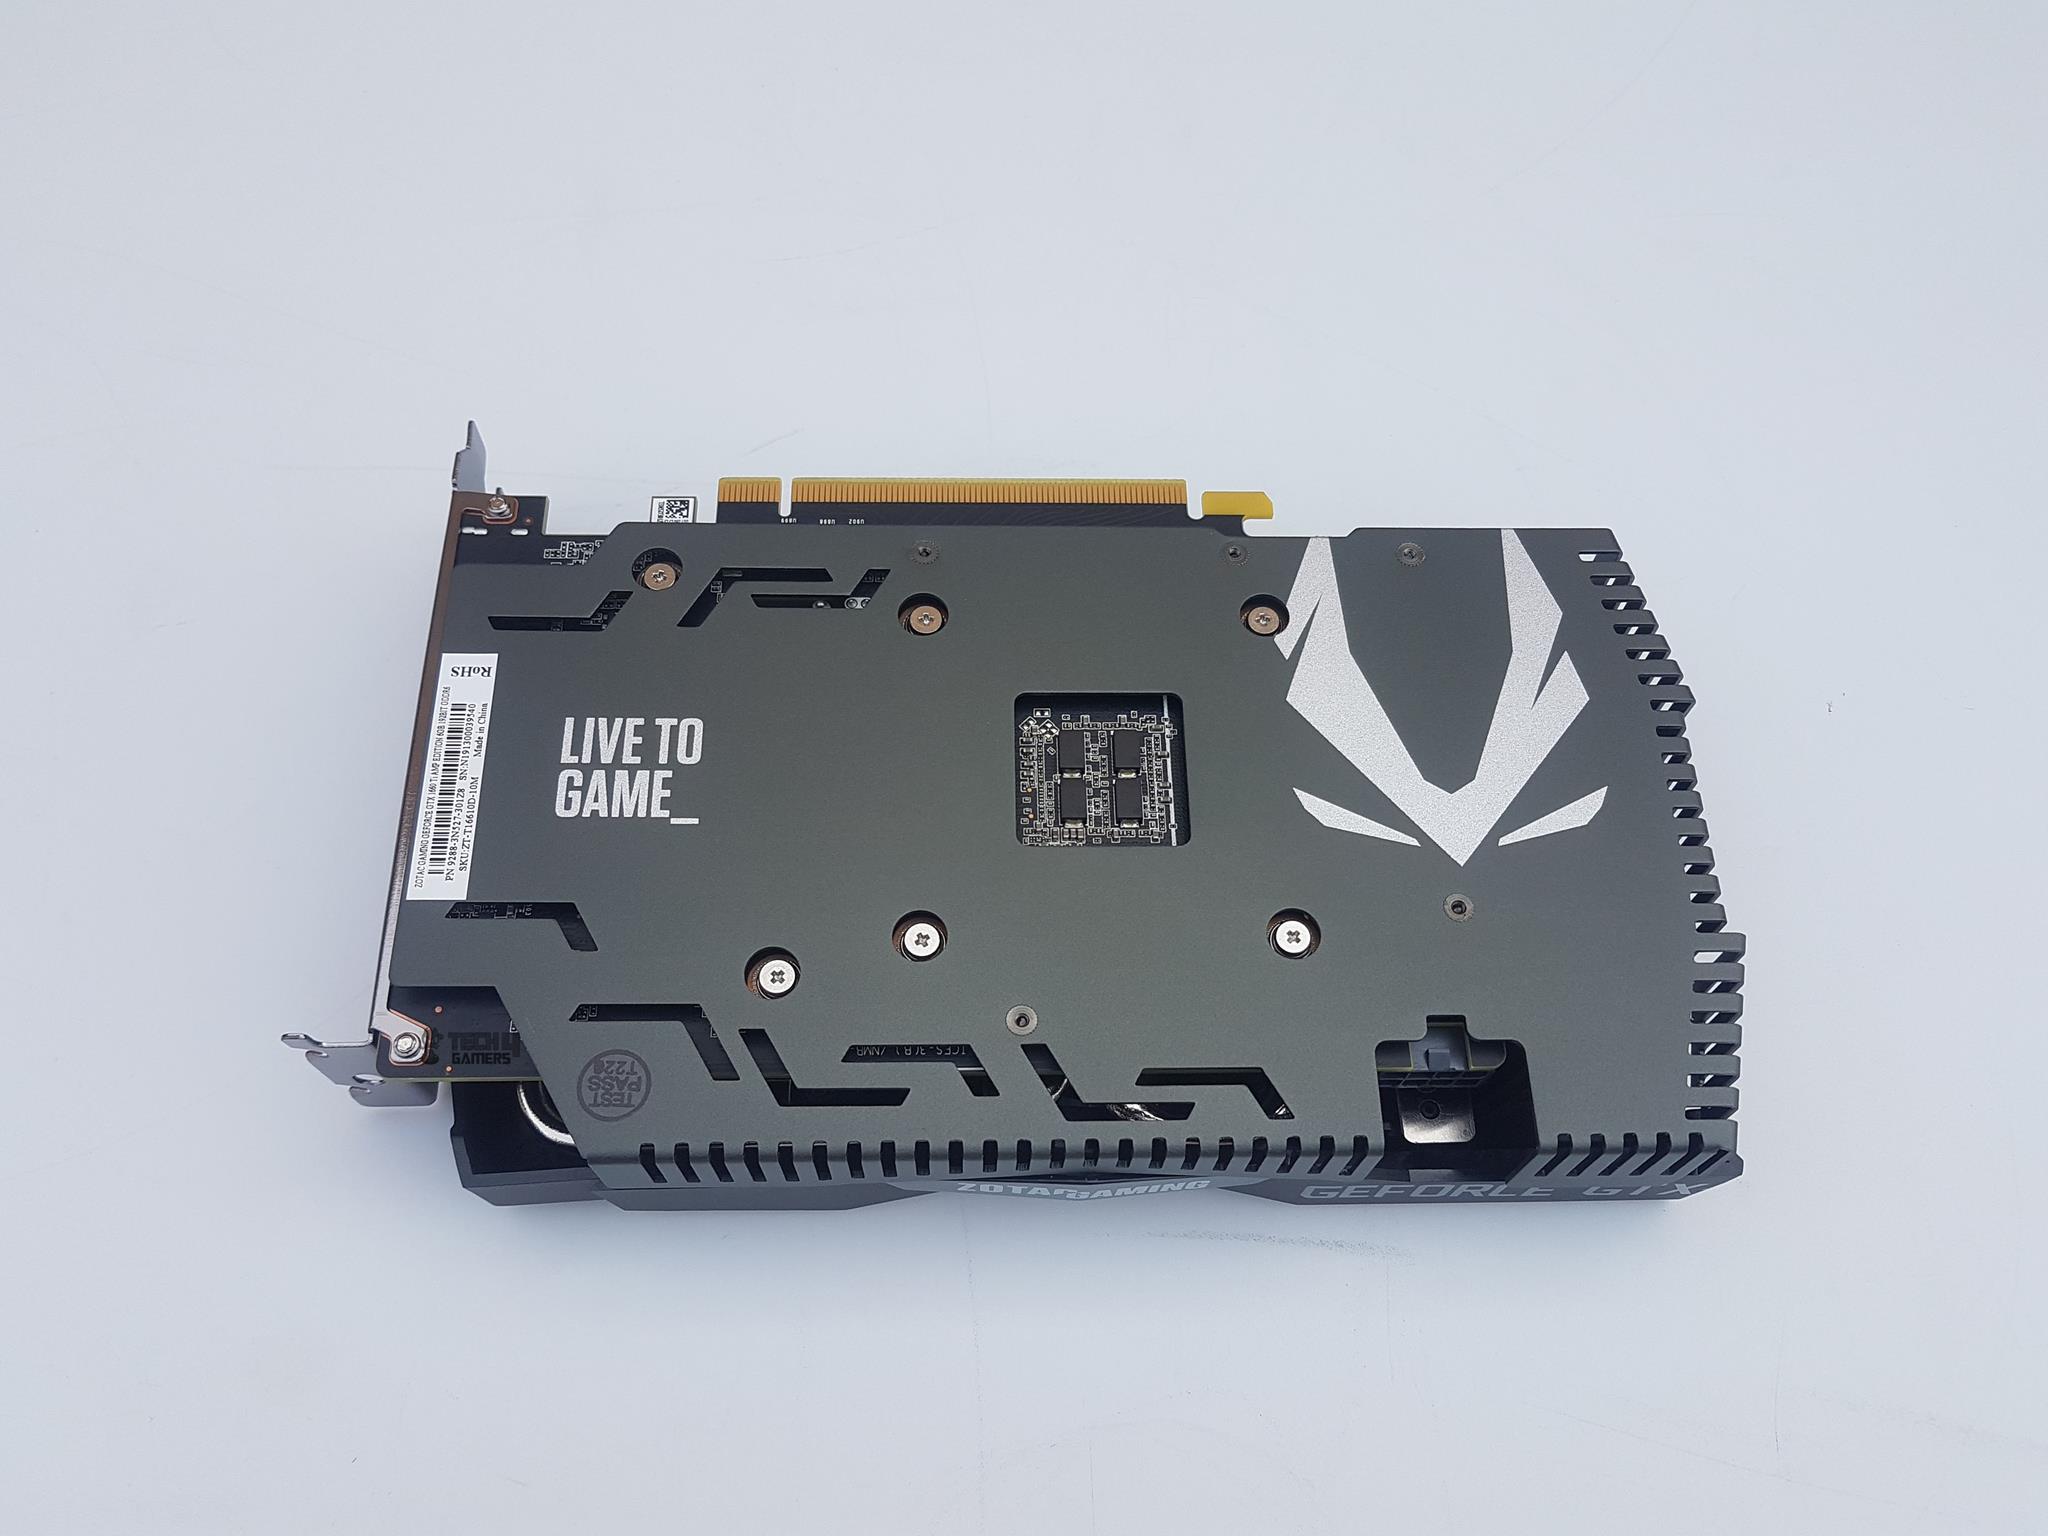 ZOTAC GeForce GTX 1660 Ti Amp Edition — The backside of the GPU